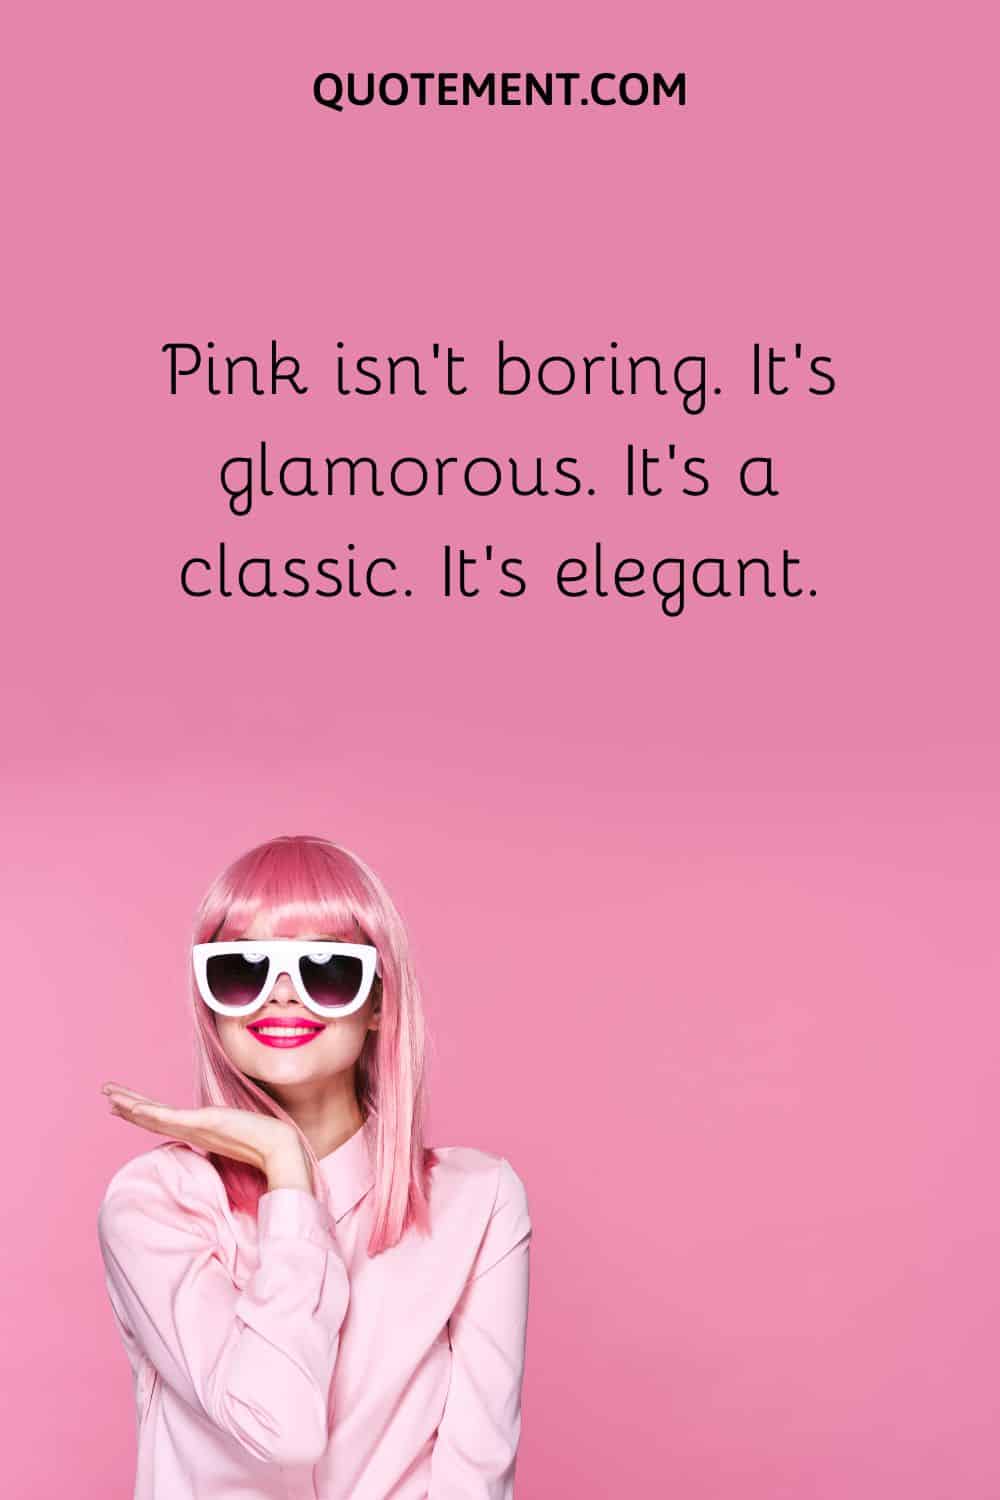 Pink isn’t boring. It’s glamorous. It’s a classic. It’s elegant.
